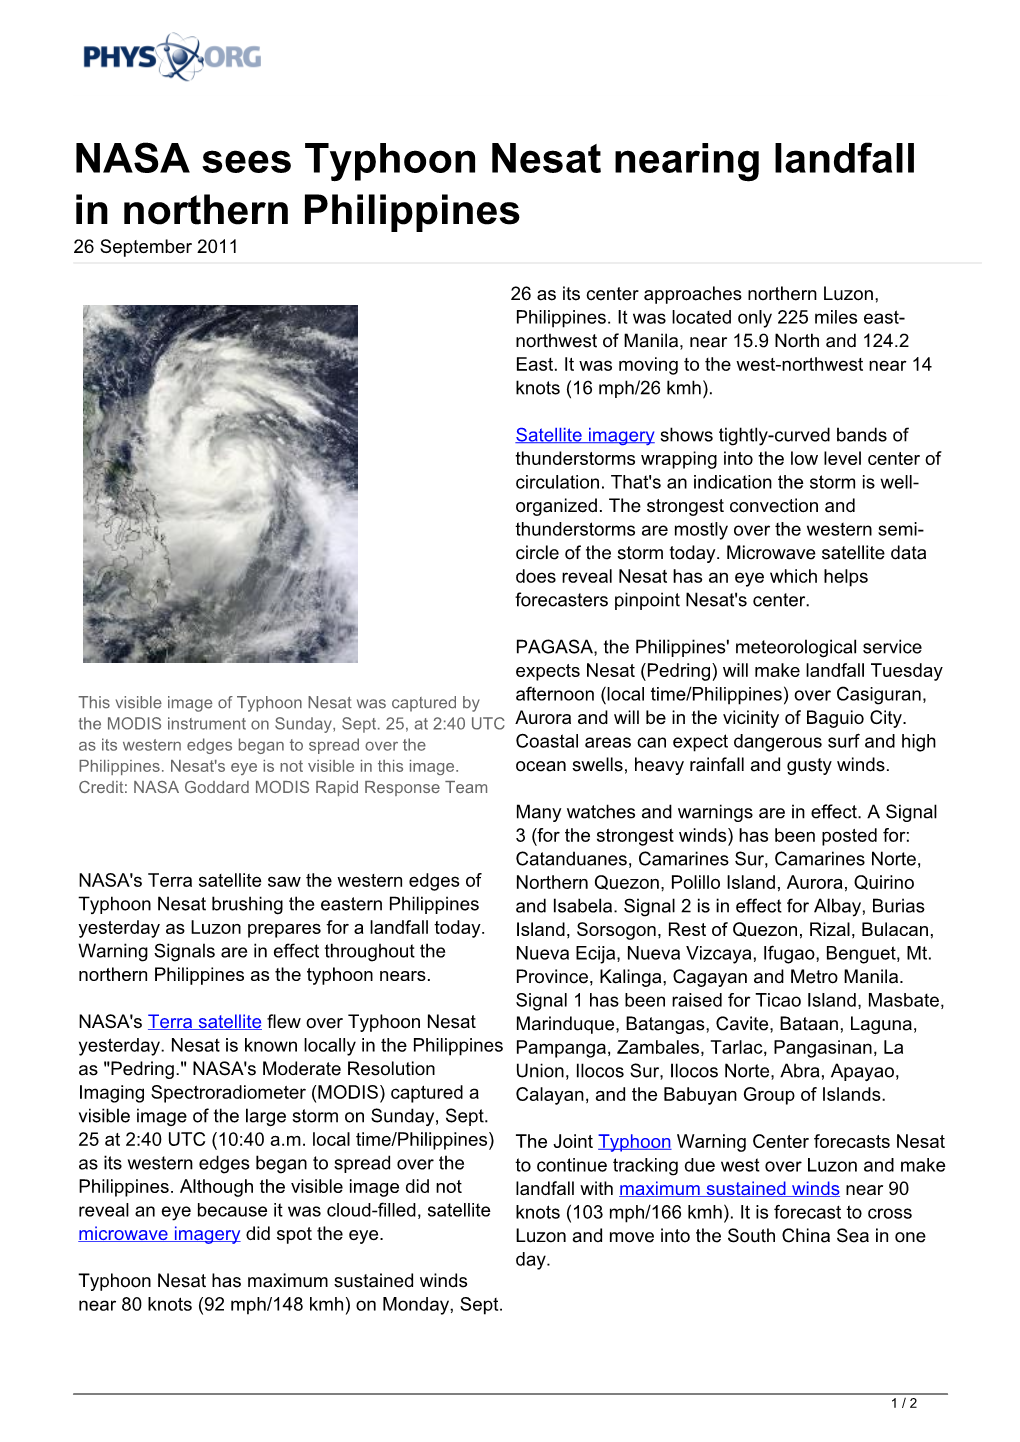 NASA Sees Typhoon Nesat Nearing Landfall in Northern Philippines 26 September 2011